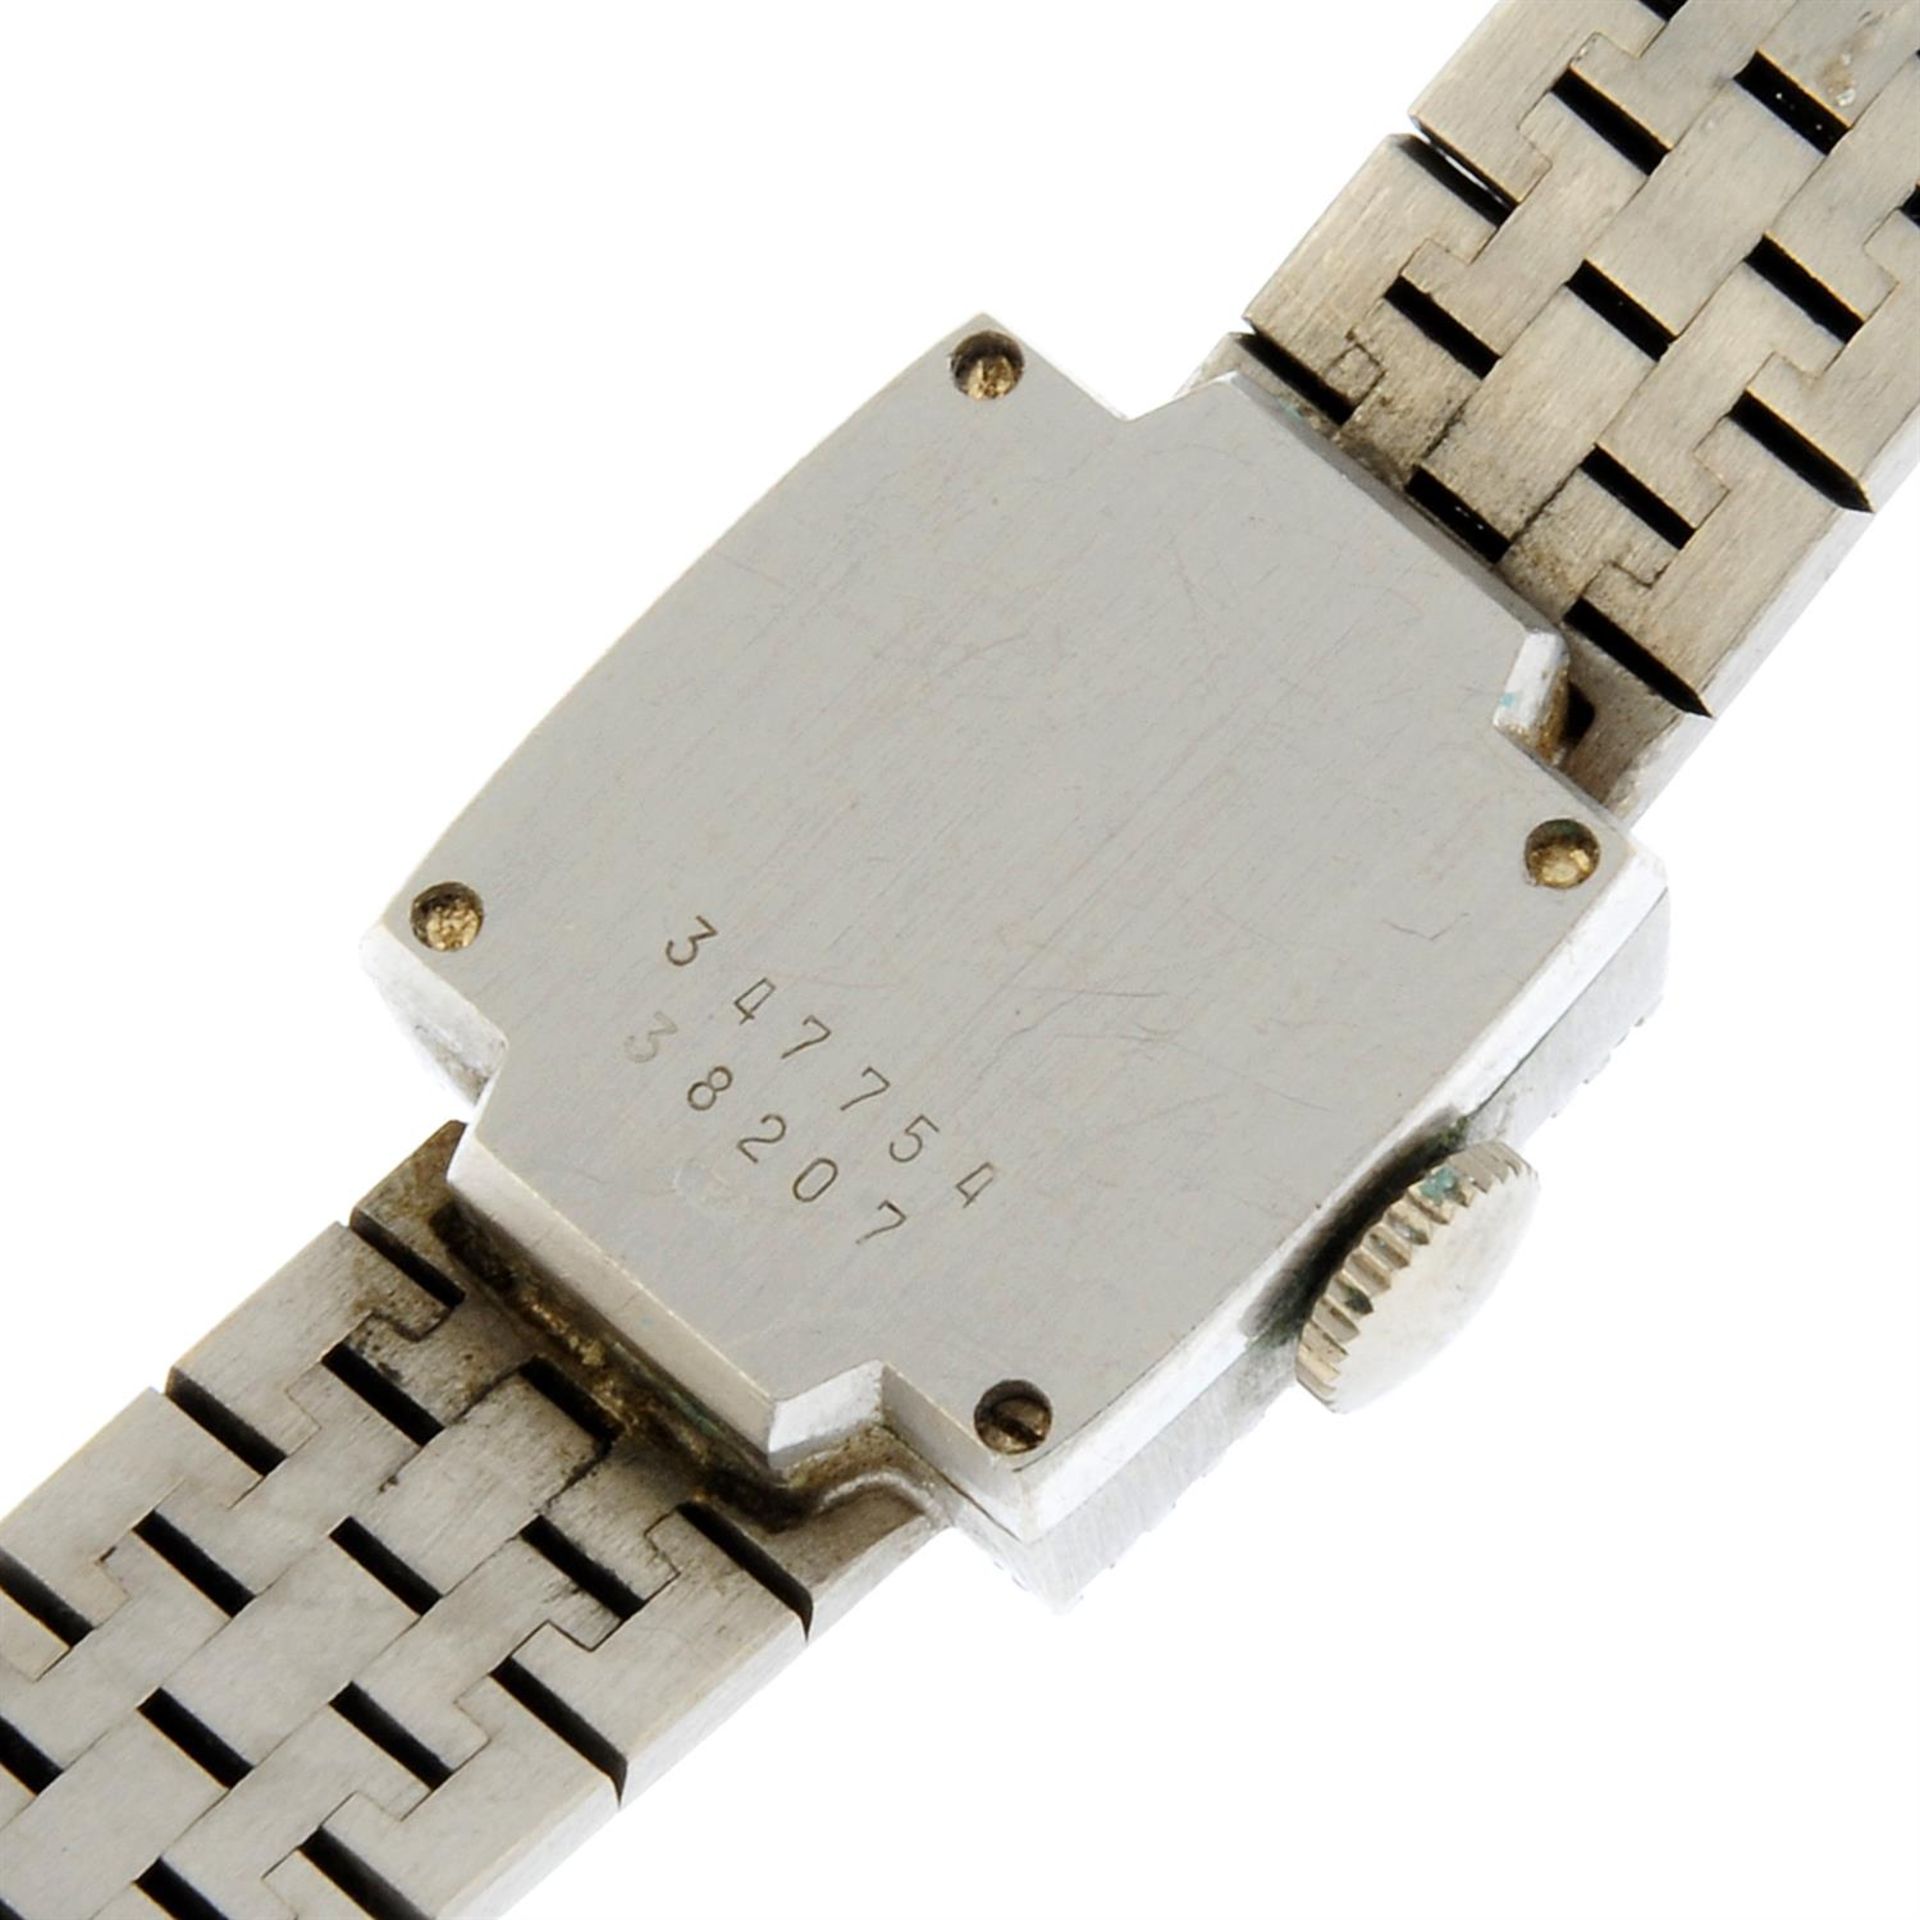 Baume & Mercier - a watch, 15x15mm. - Image 4 of 5